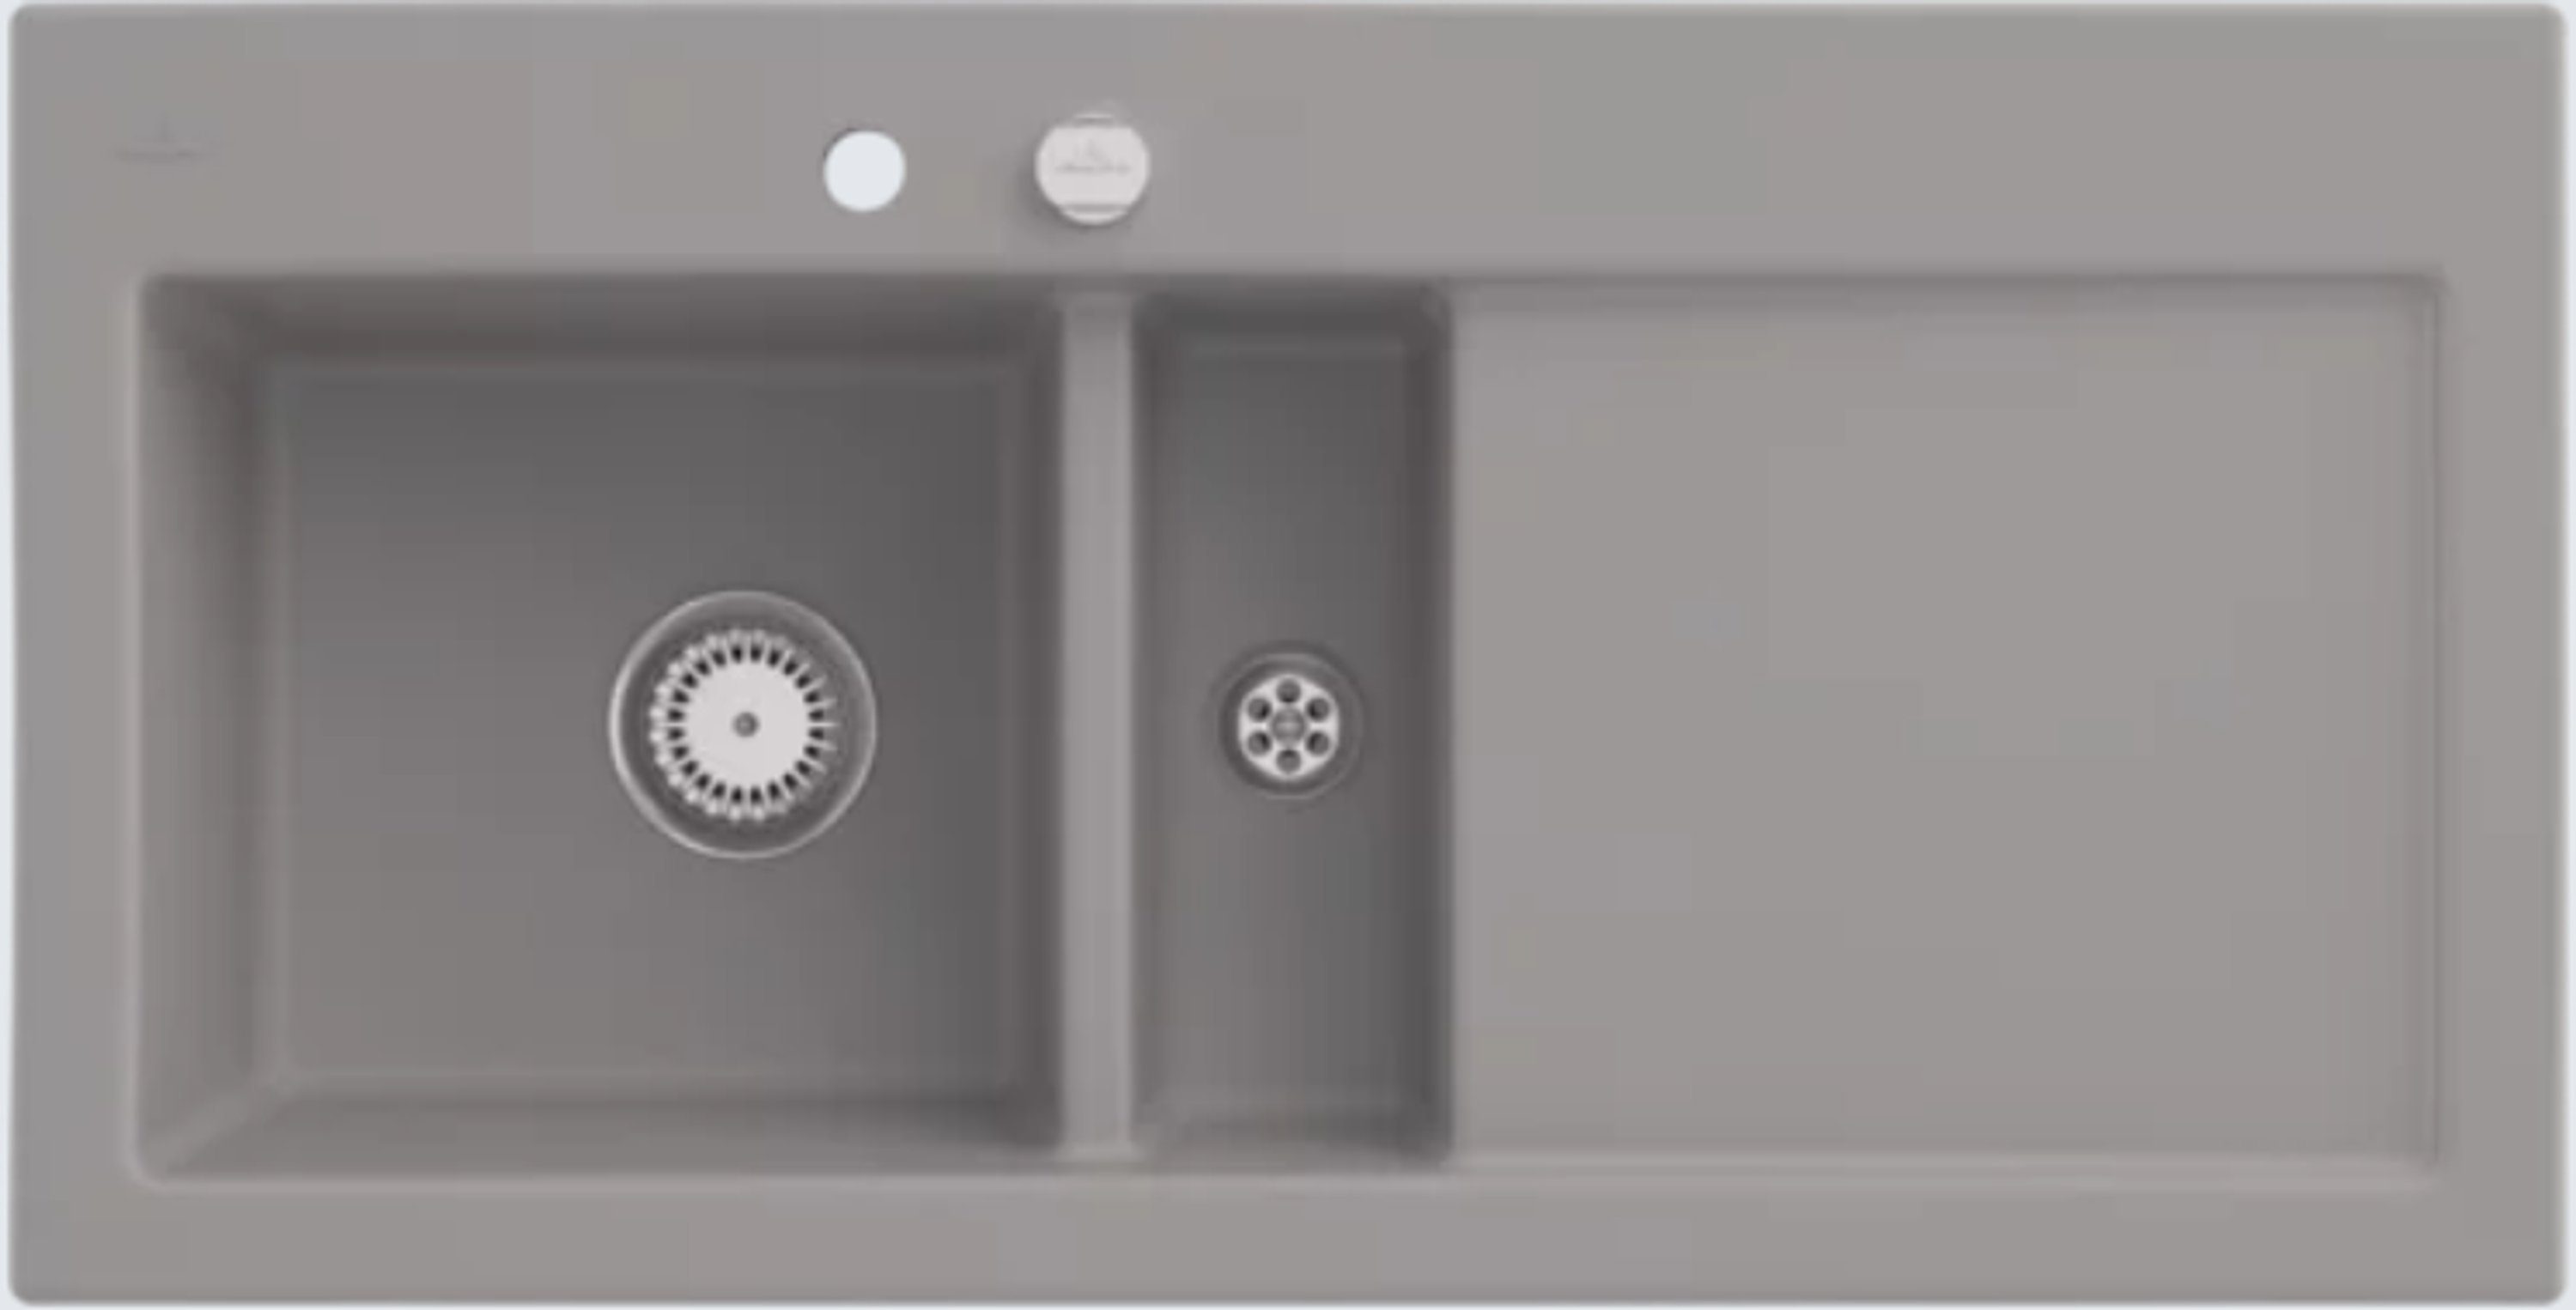 Becken Rechteckig, Boch Küchenspüle 100/22 KD, rechts & Geschmacksmuster möglich 02 und links geschützt, 6770 cm, Villeroy